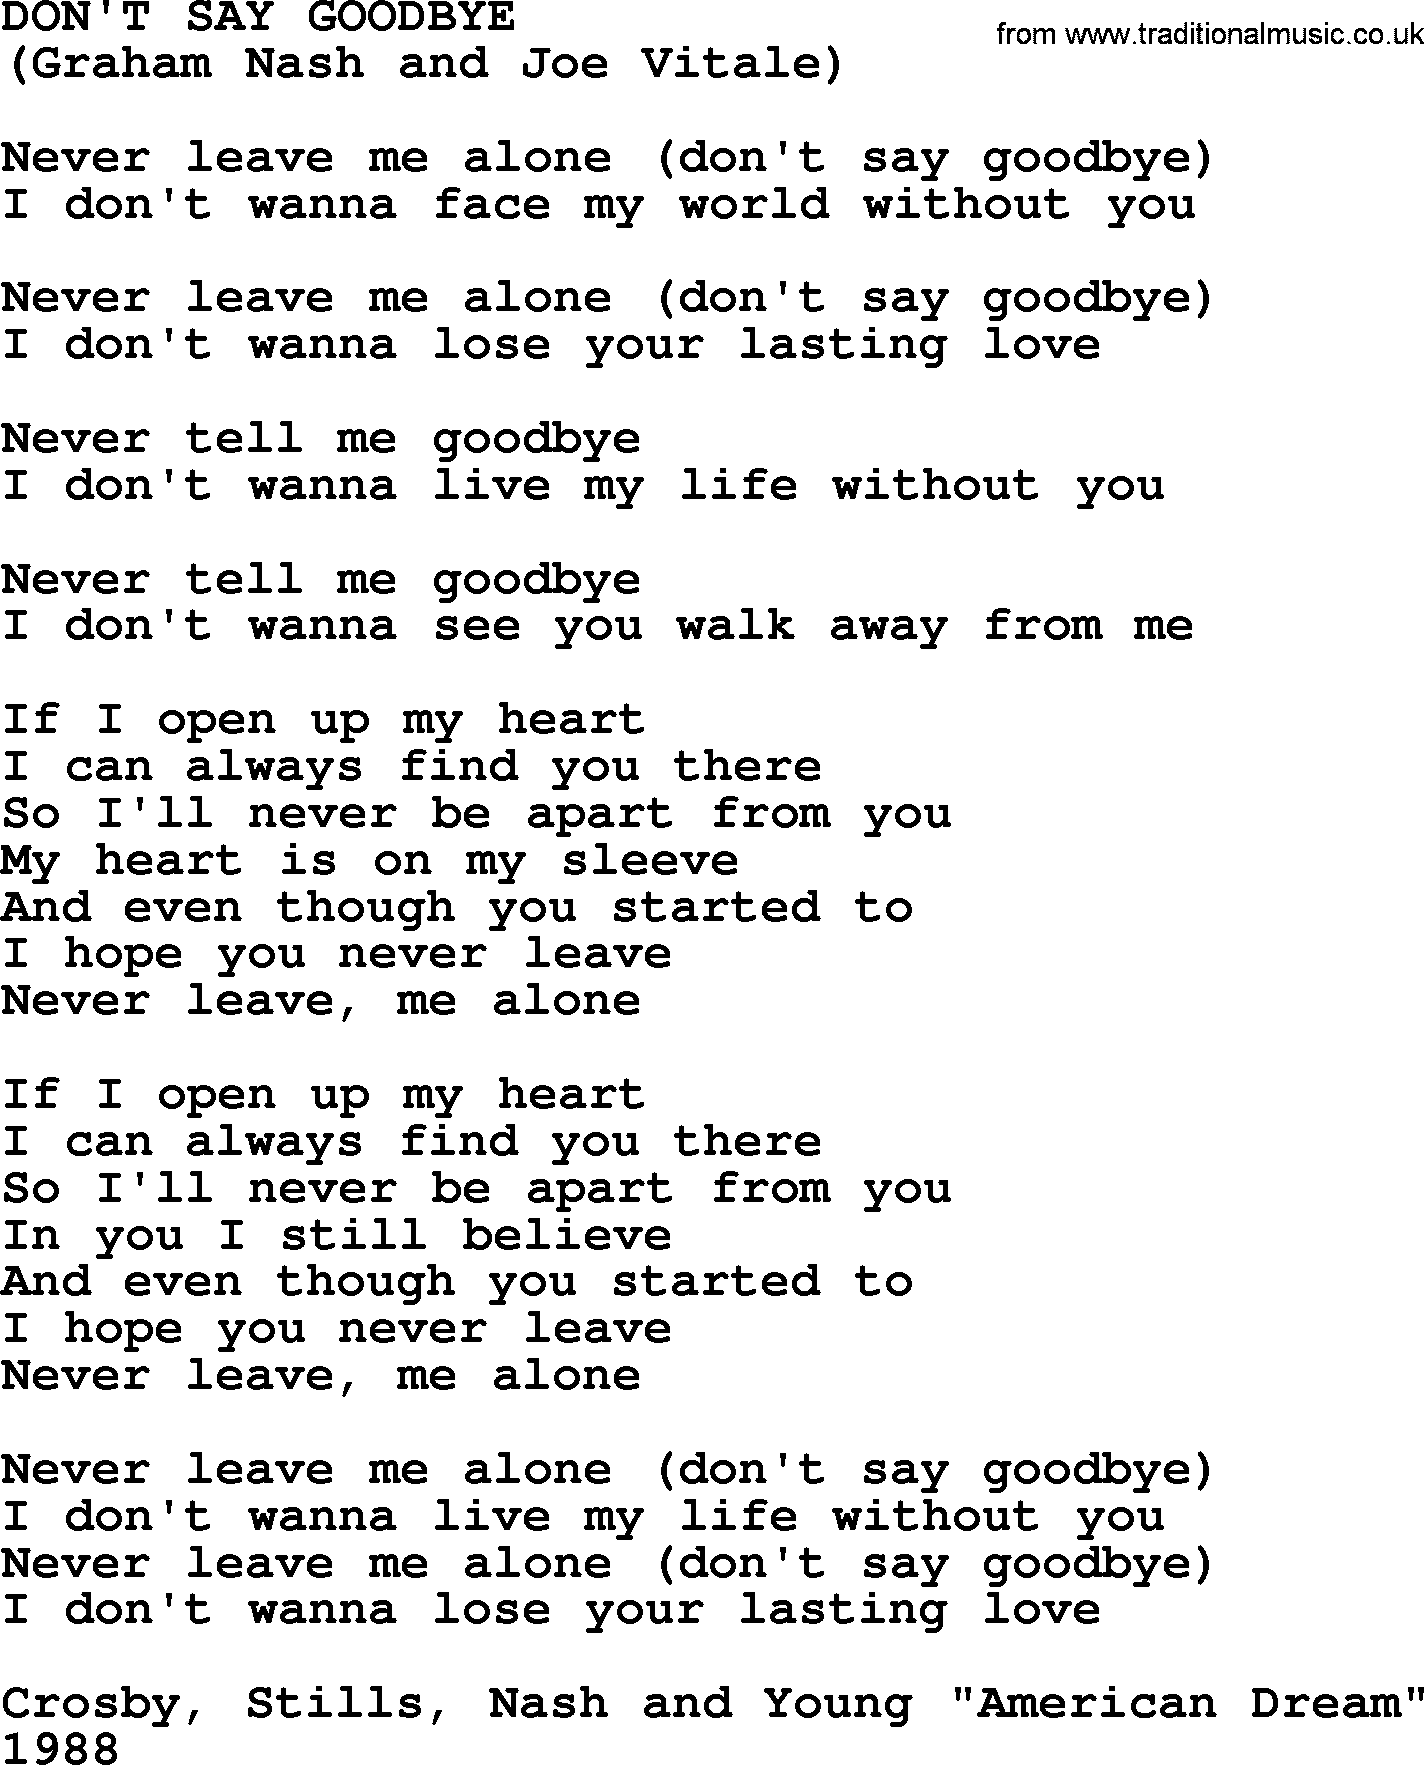 The Byrds song Don't Say Goodbye, lyrics